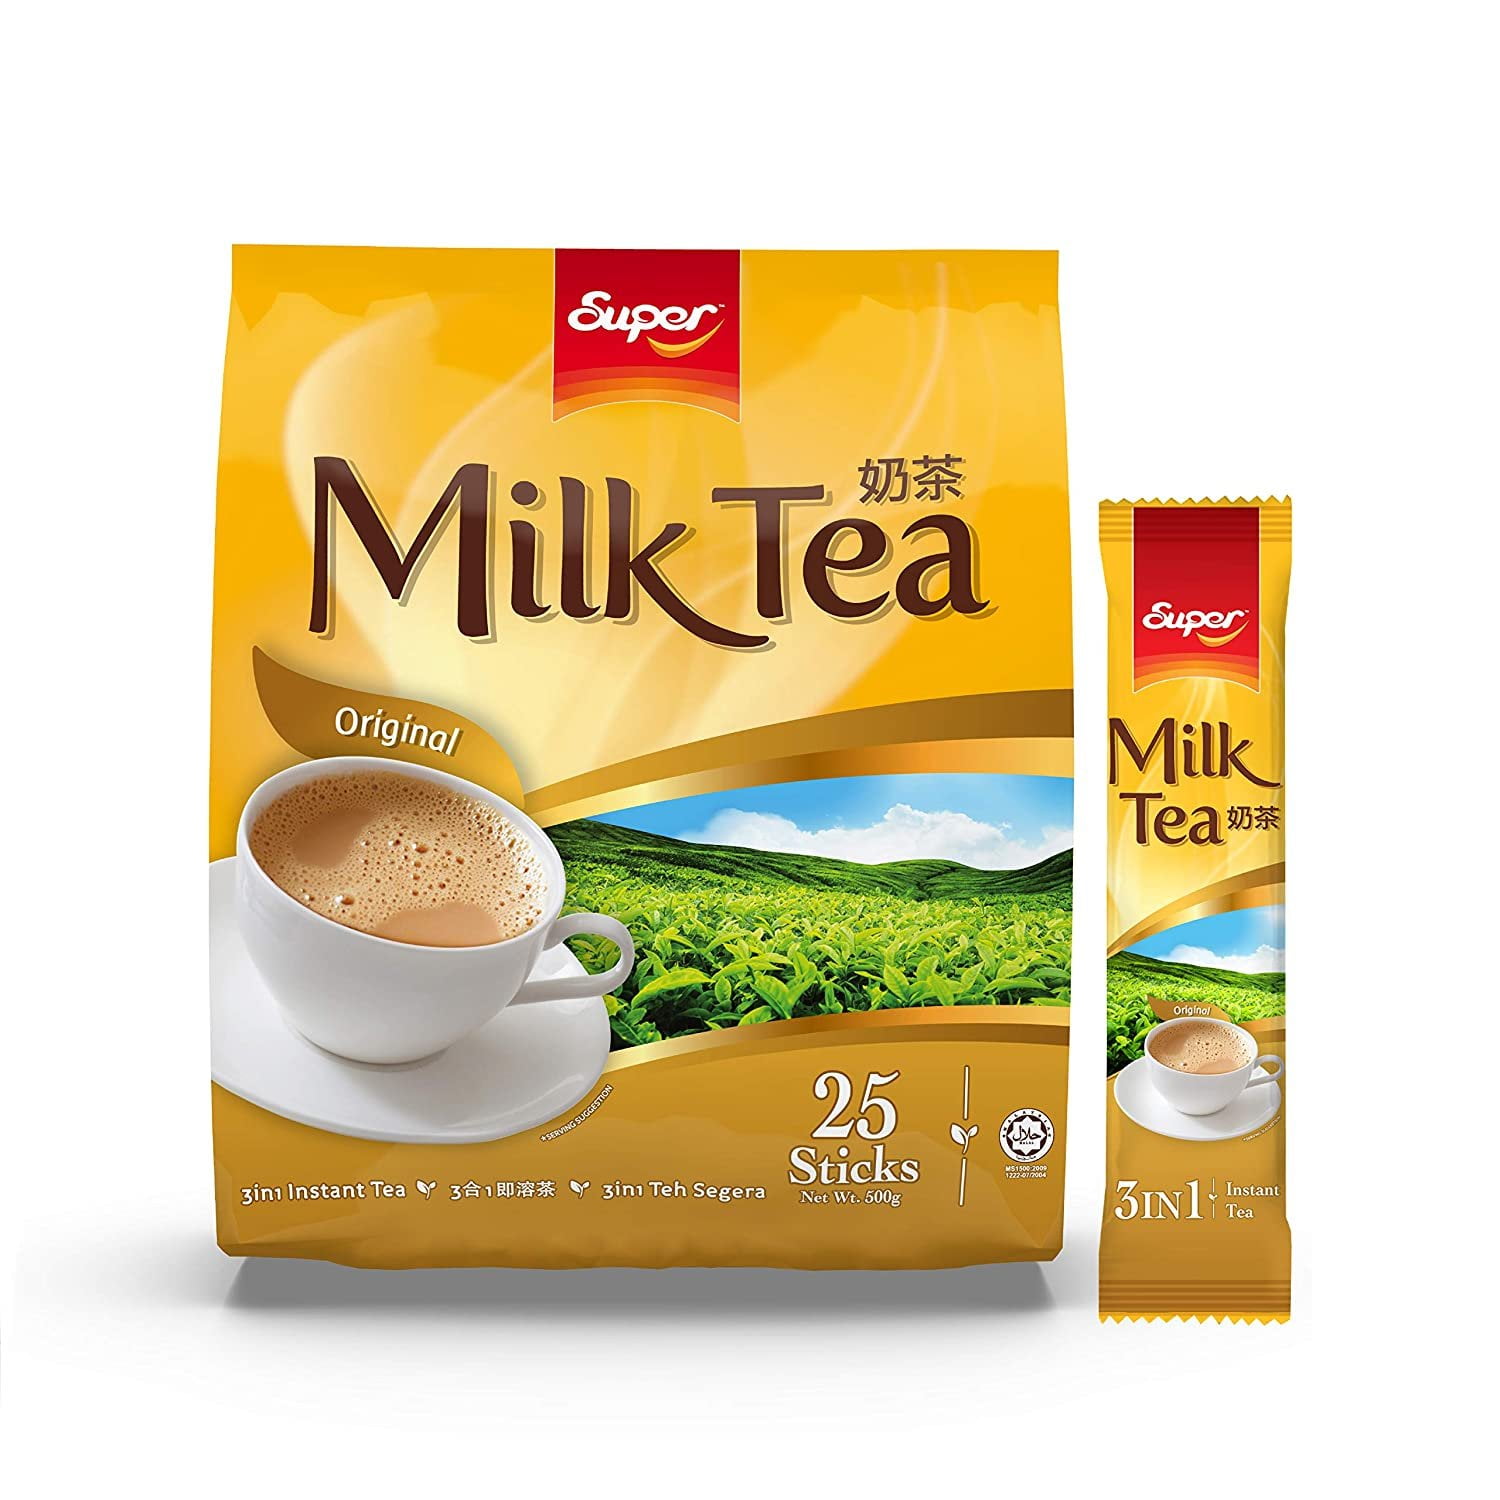 The original milk tea